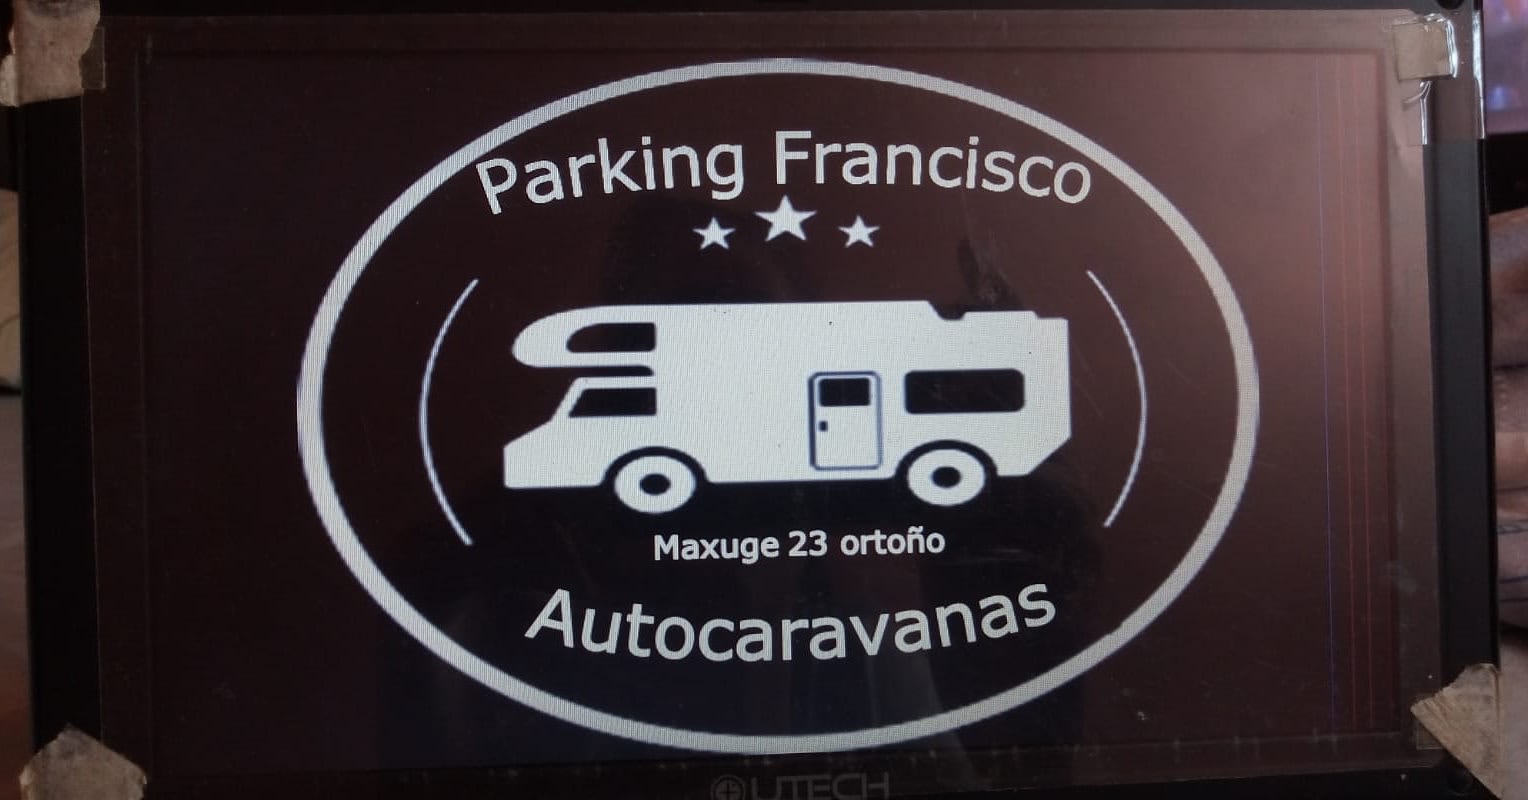 Parking Francisco